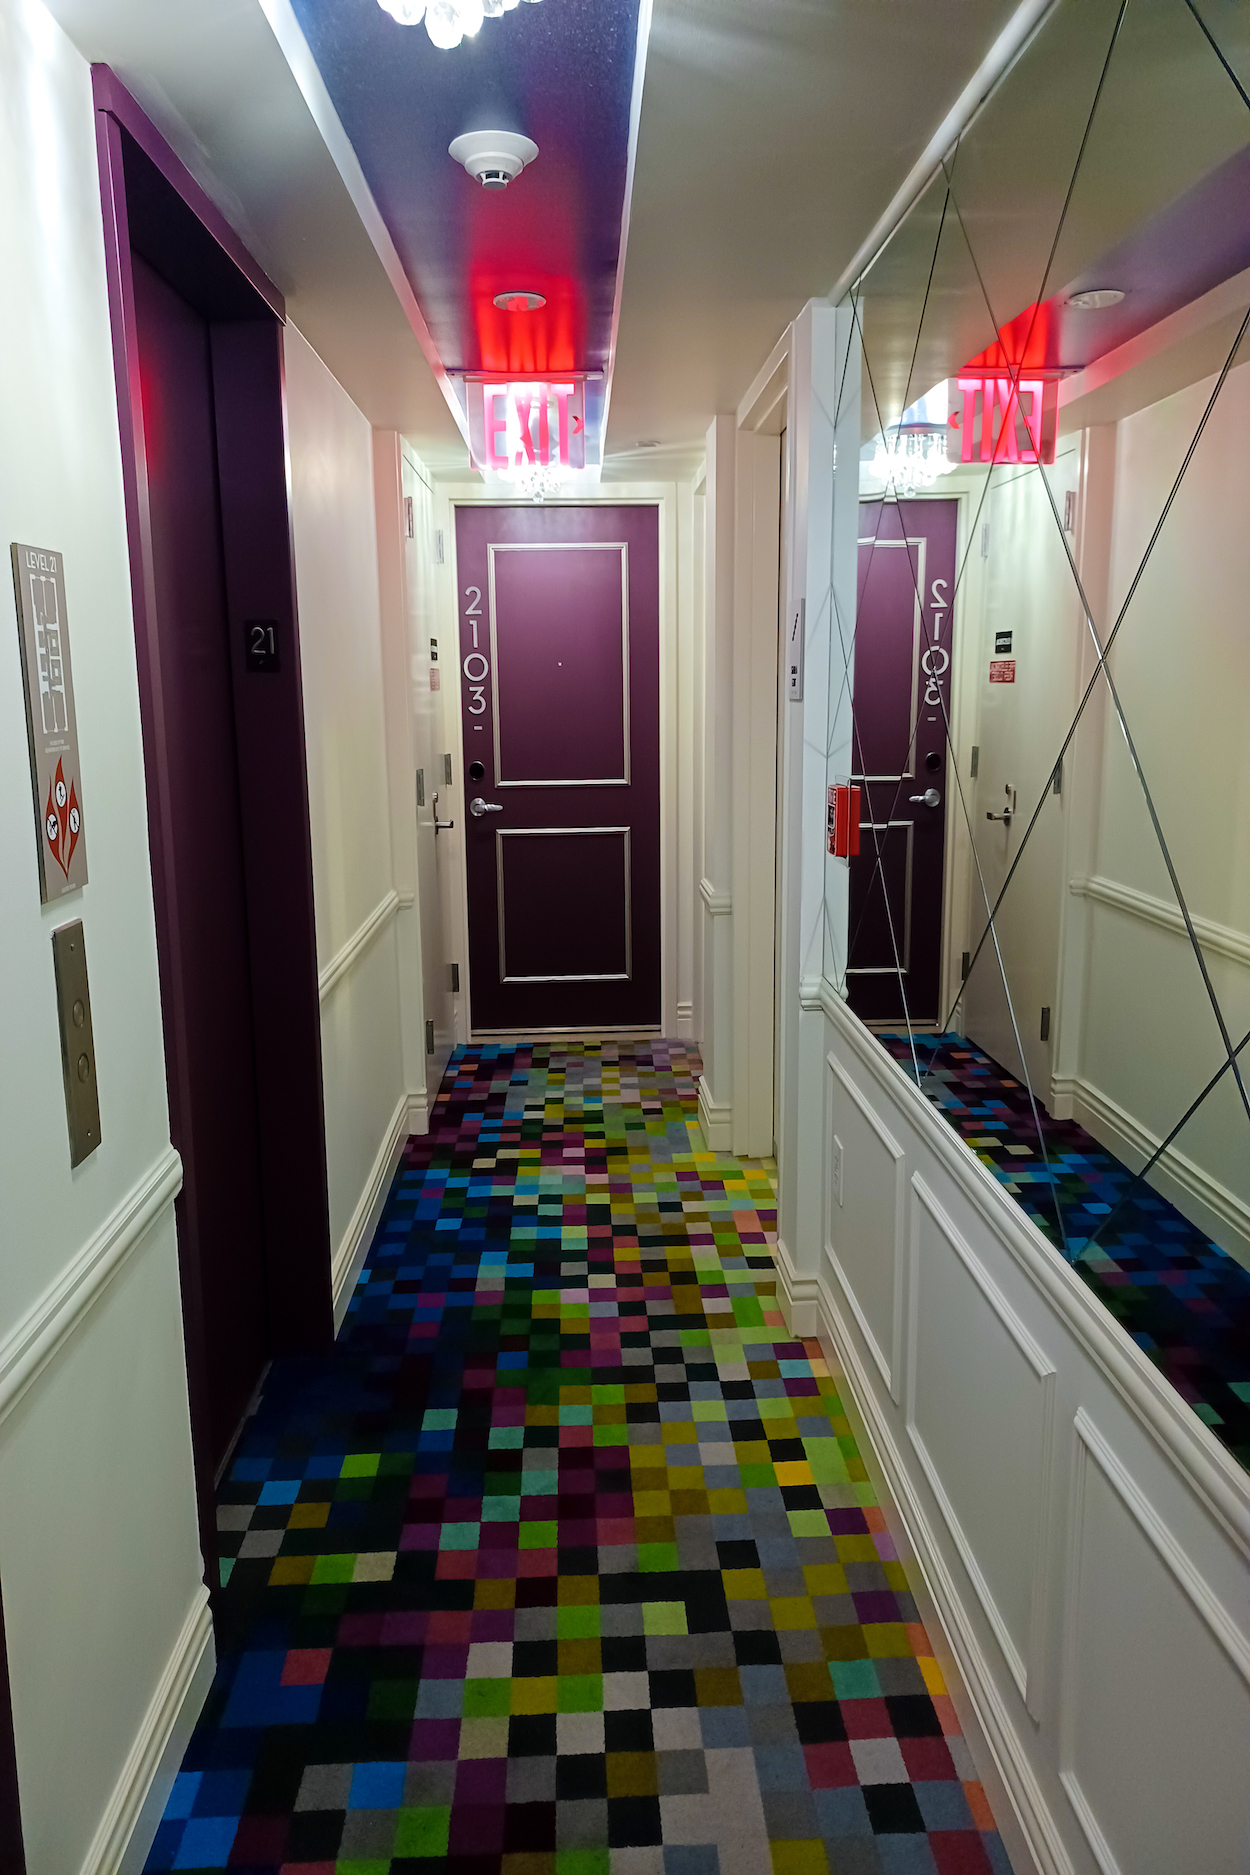 StayPineapple New York Hallway 21st floor